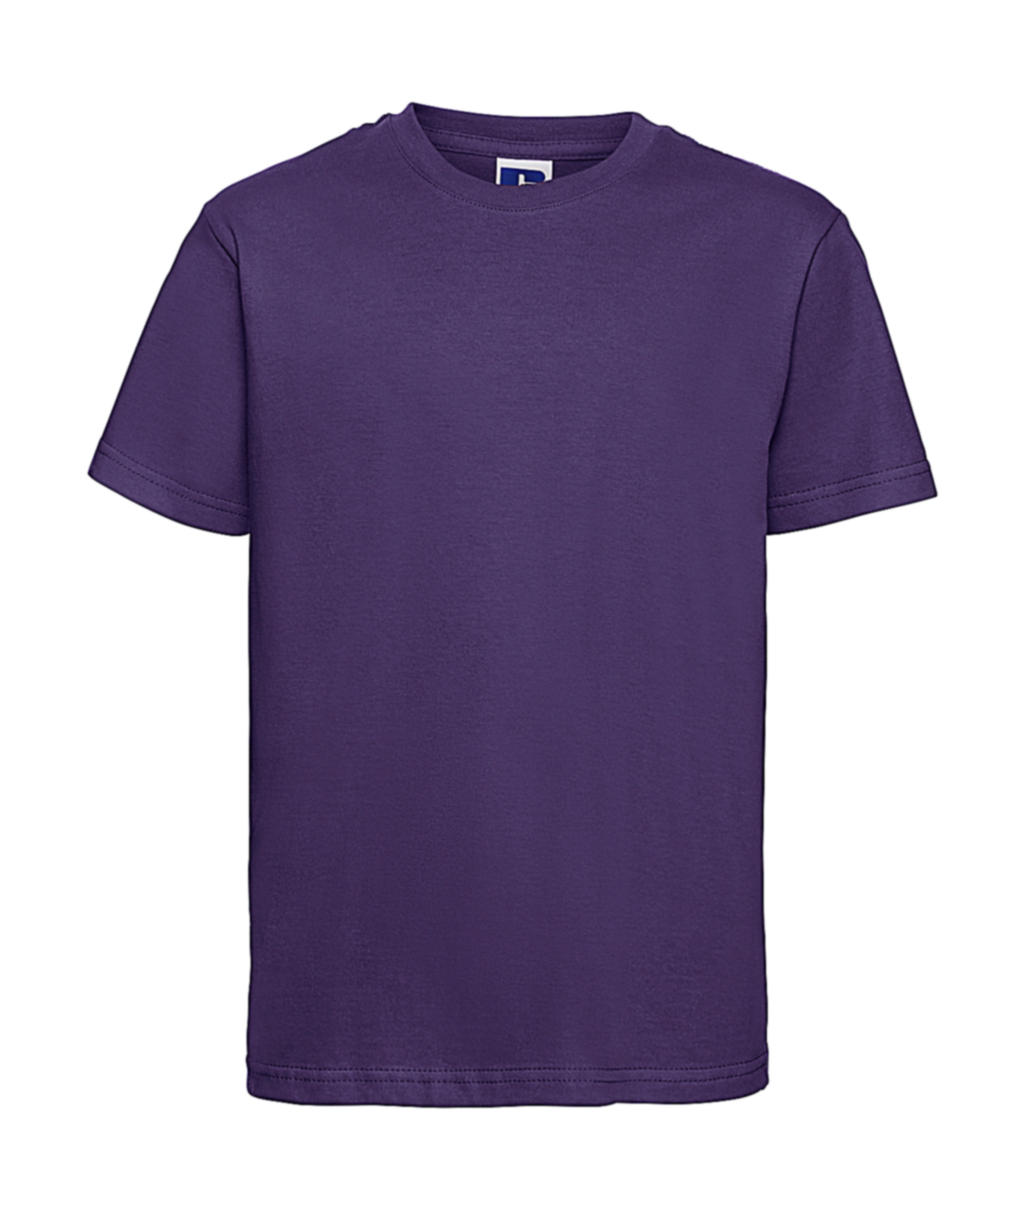 Detské priliehavé tričko - purple